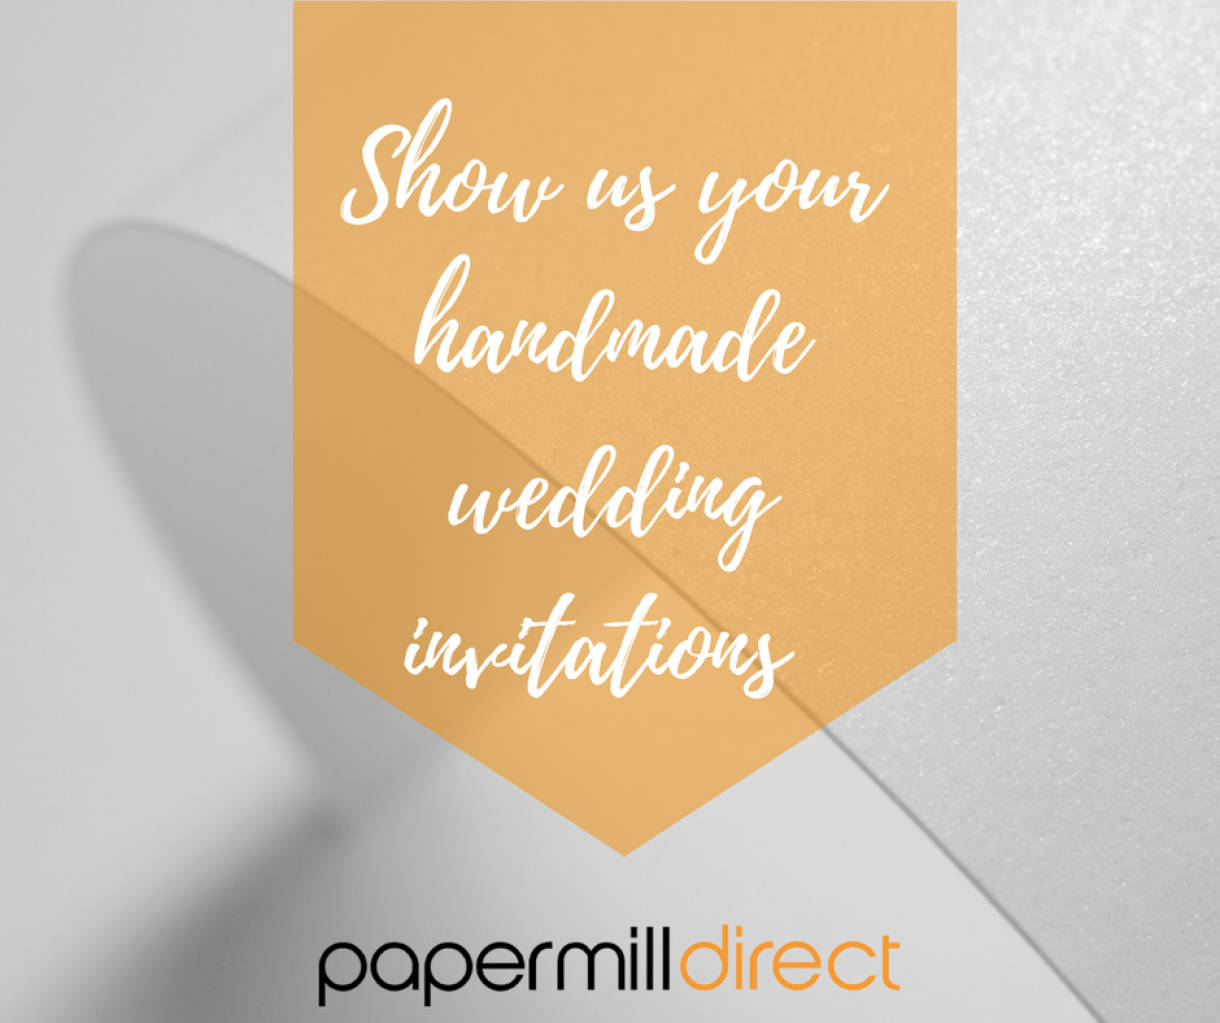 Show Us Your Handmade Wedding Invitations